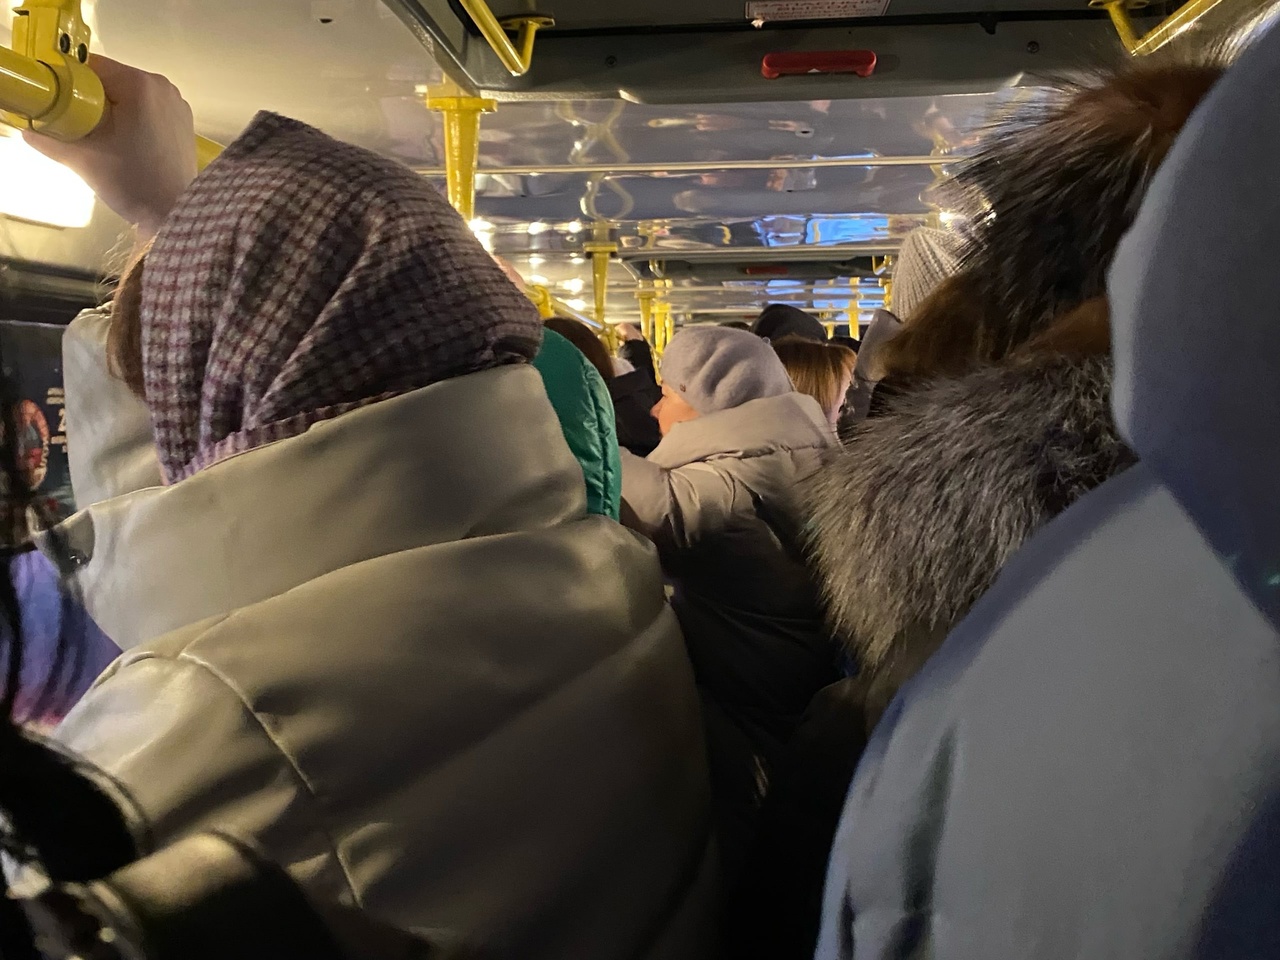 "Носом и зубами влетела в стекло": в Ярославле разгорелся скандал из-за водителя автобуса 